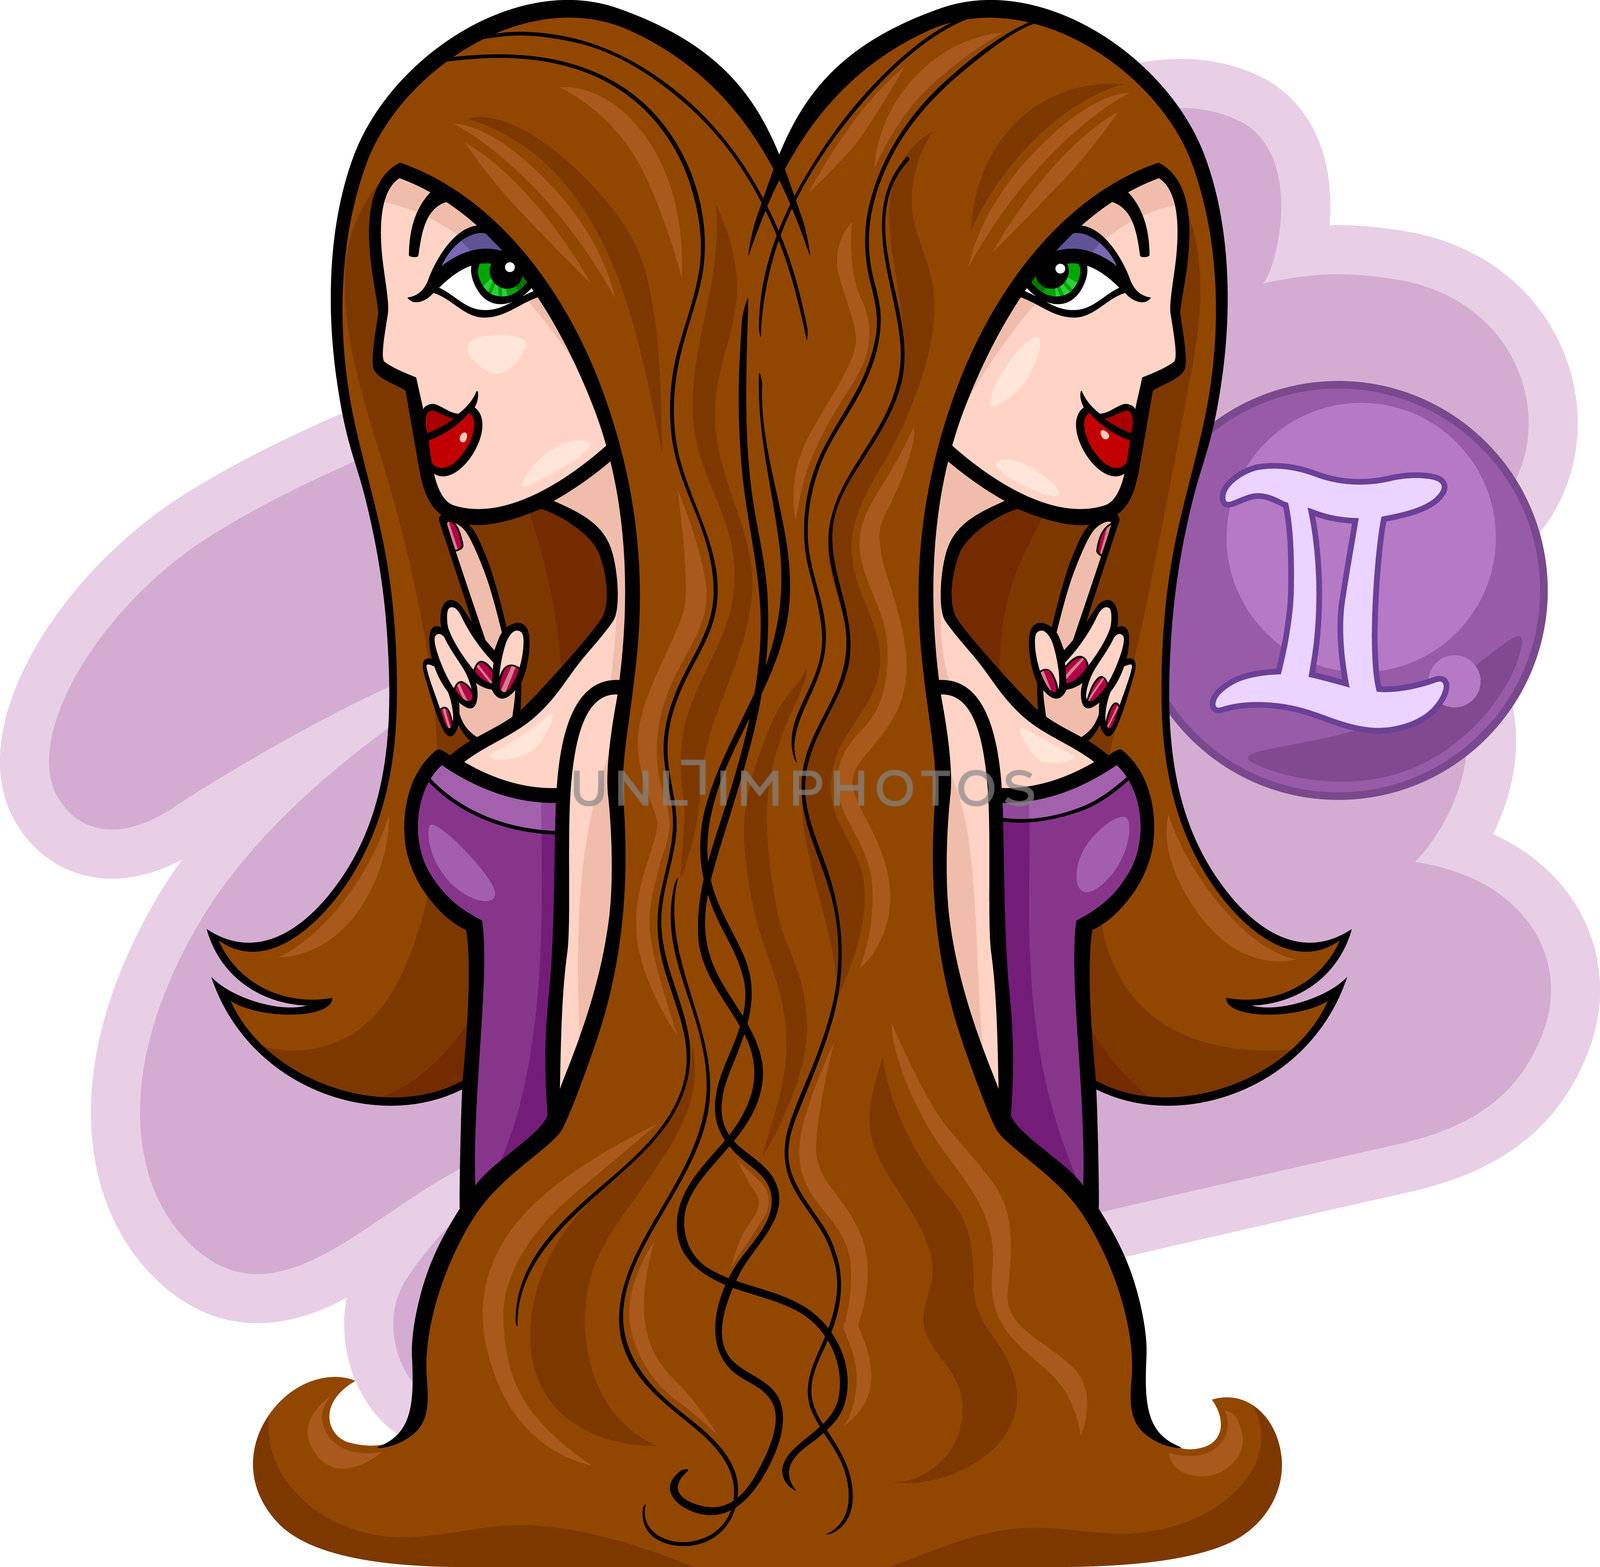 Illustration of Beautiful Twins Women Cartoon Characters and Gemini Horoscope Zodiac Sign